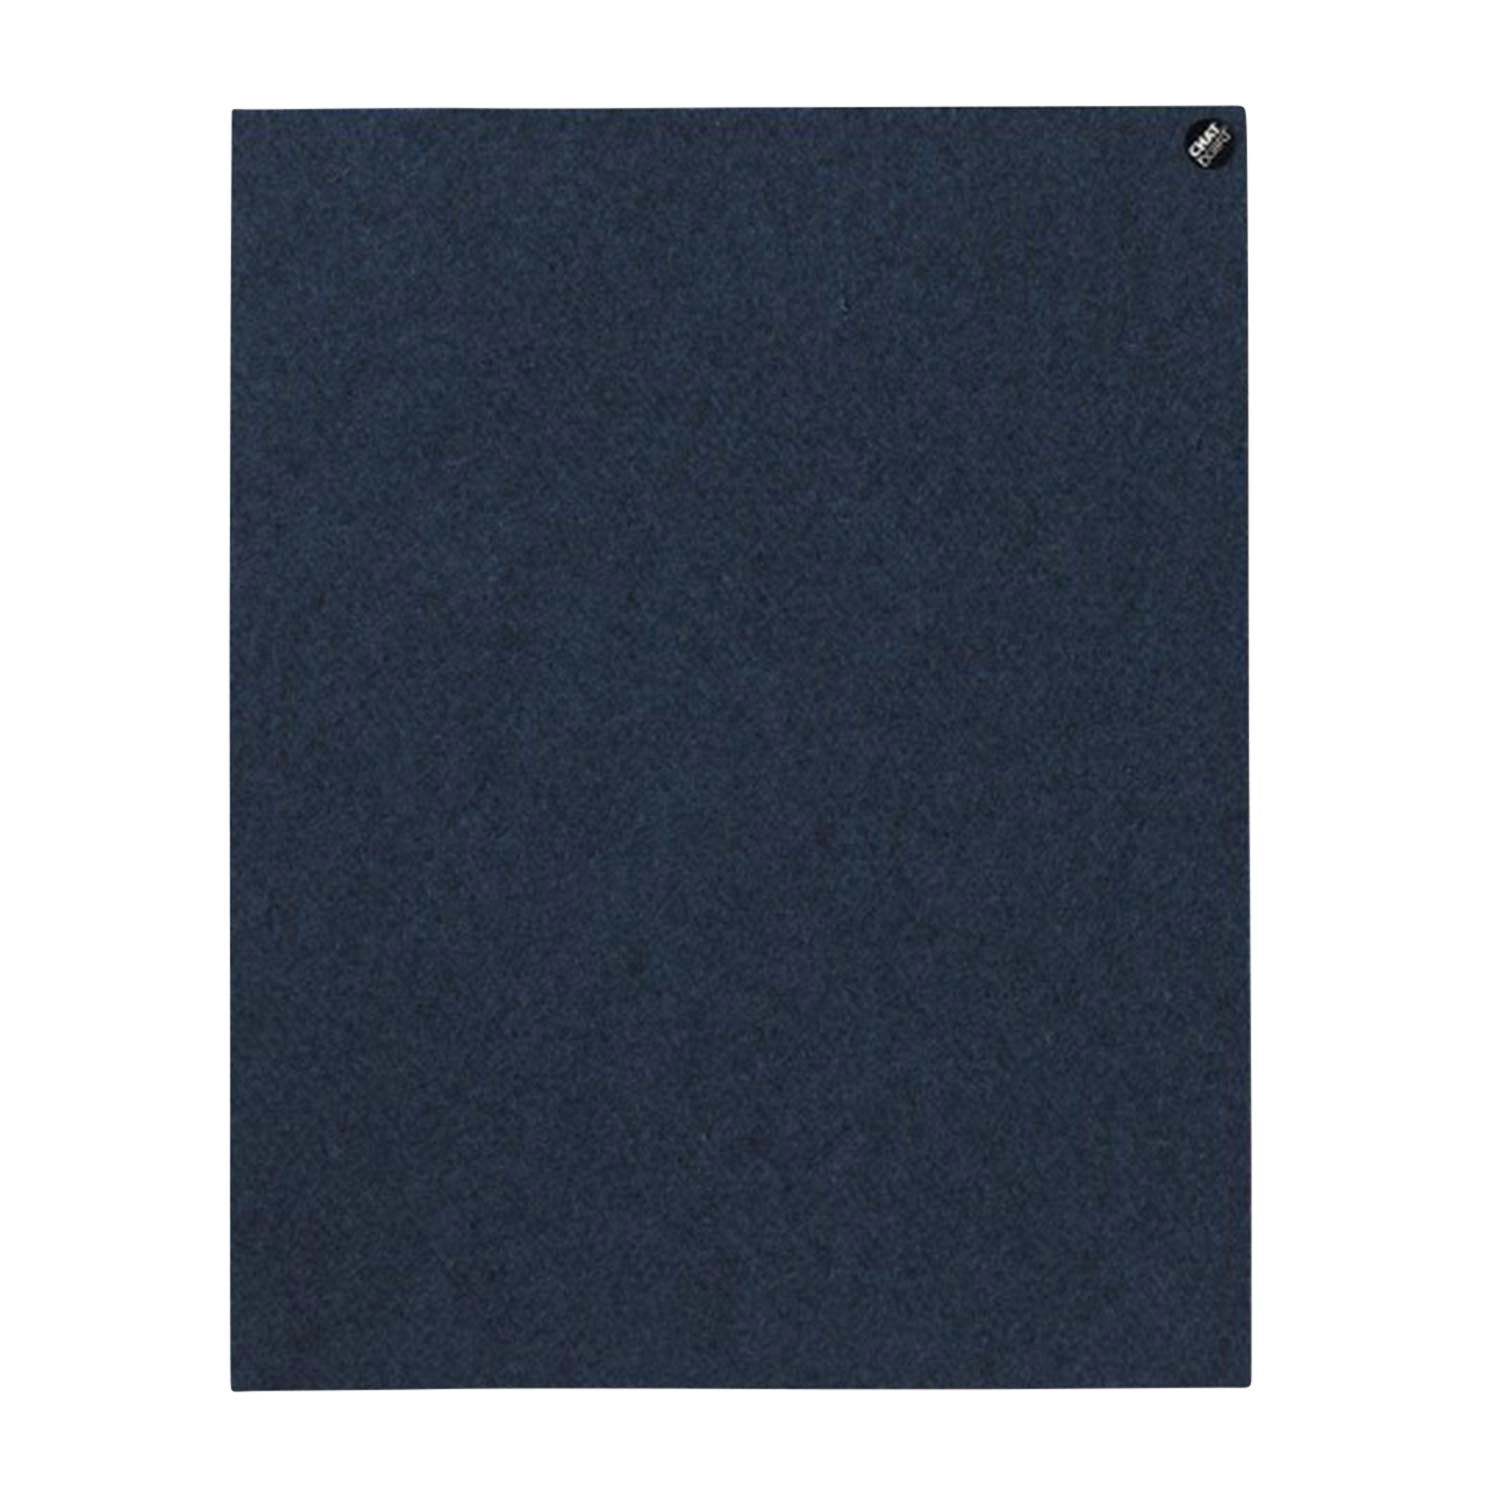 BuzziFelt Pinnwand, Grösse 150 x 120 cm, Ausrichtung horizontal, Buzzifelt (Filz) 75 jeans von Chat Board